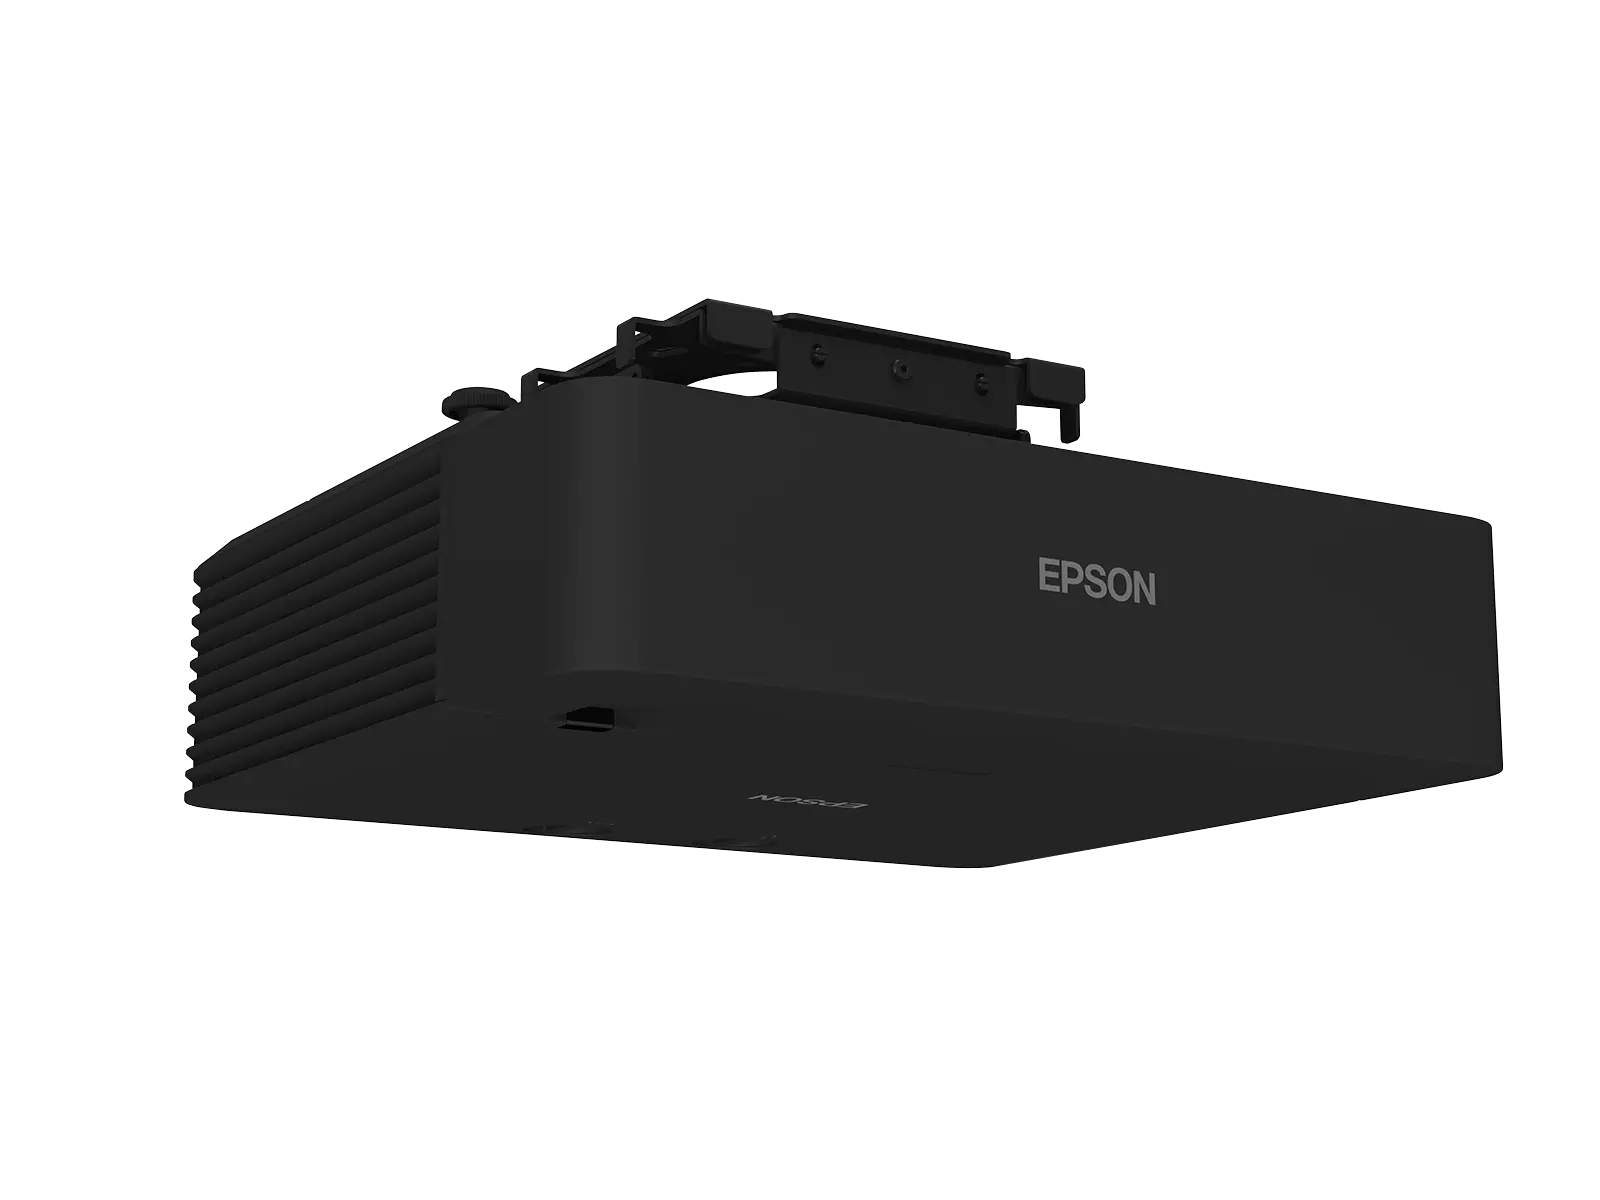 Epson EB-L735U Projector (V11HA25140)